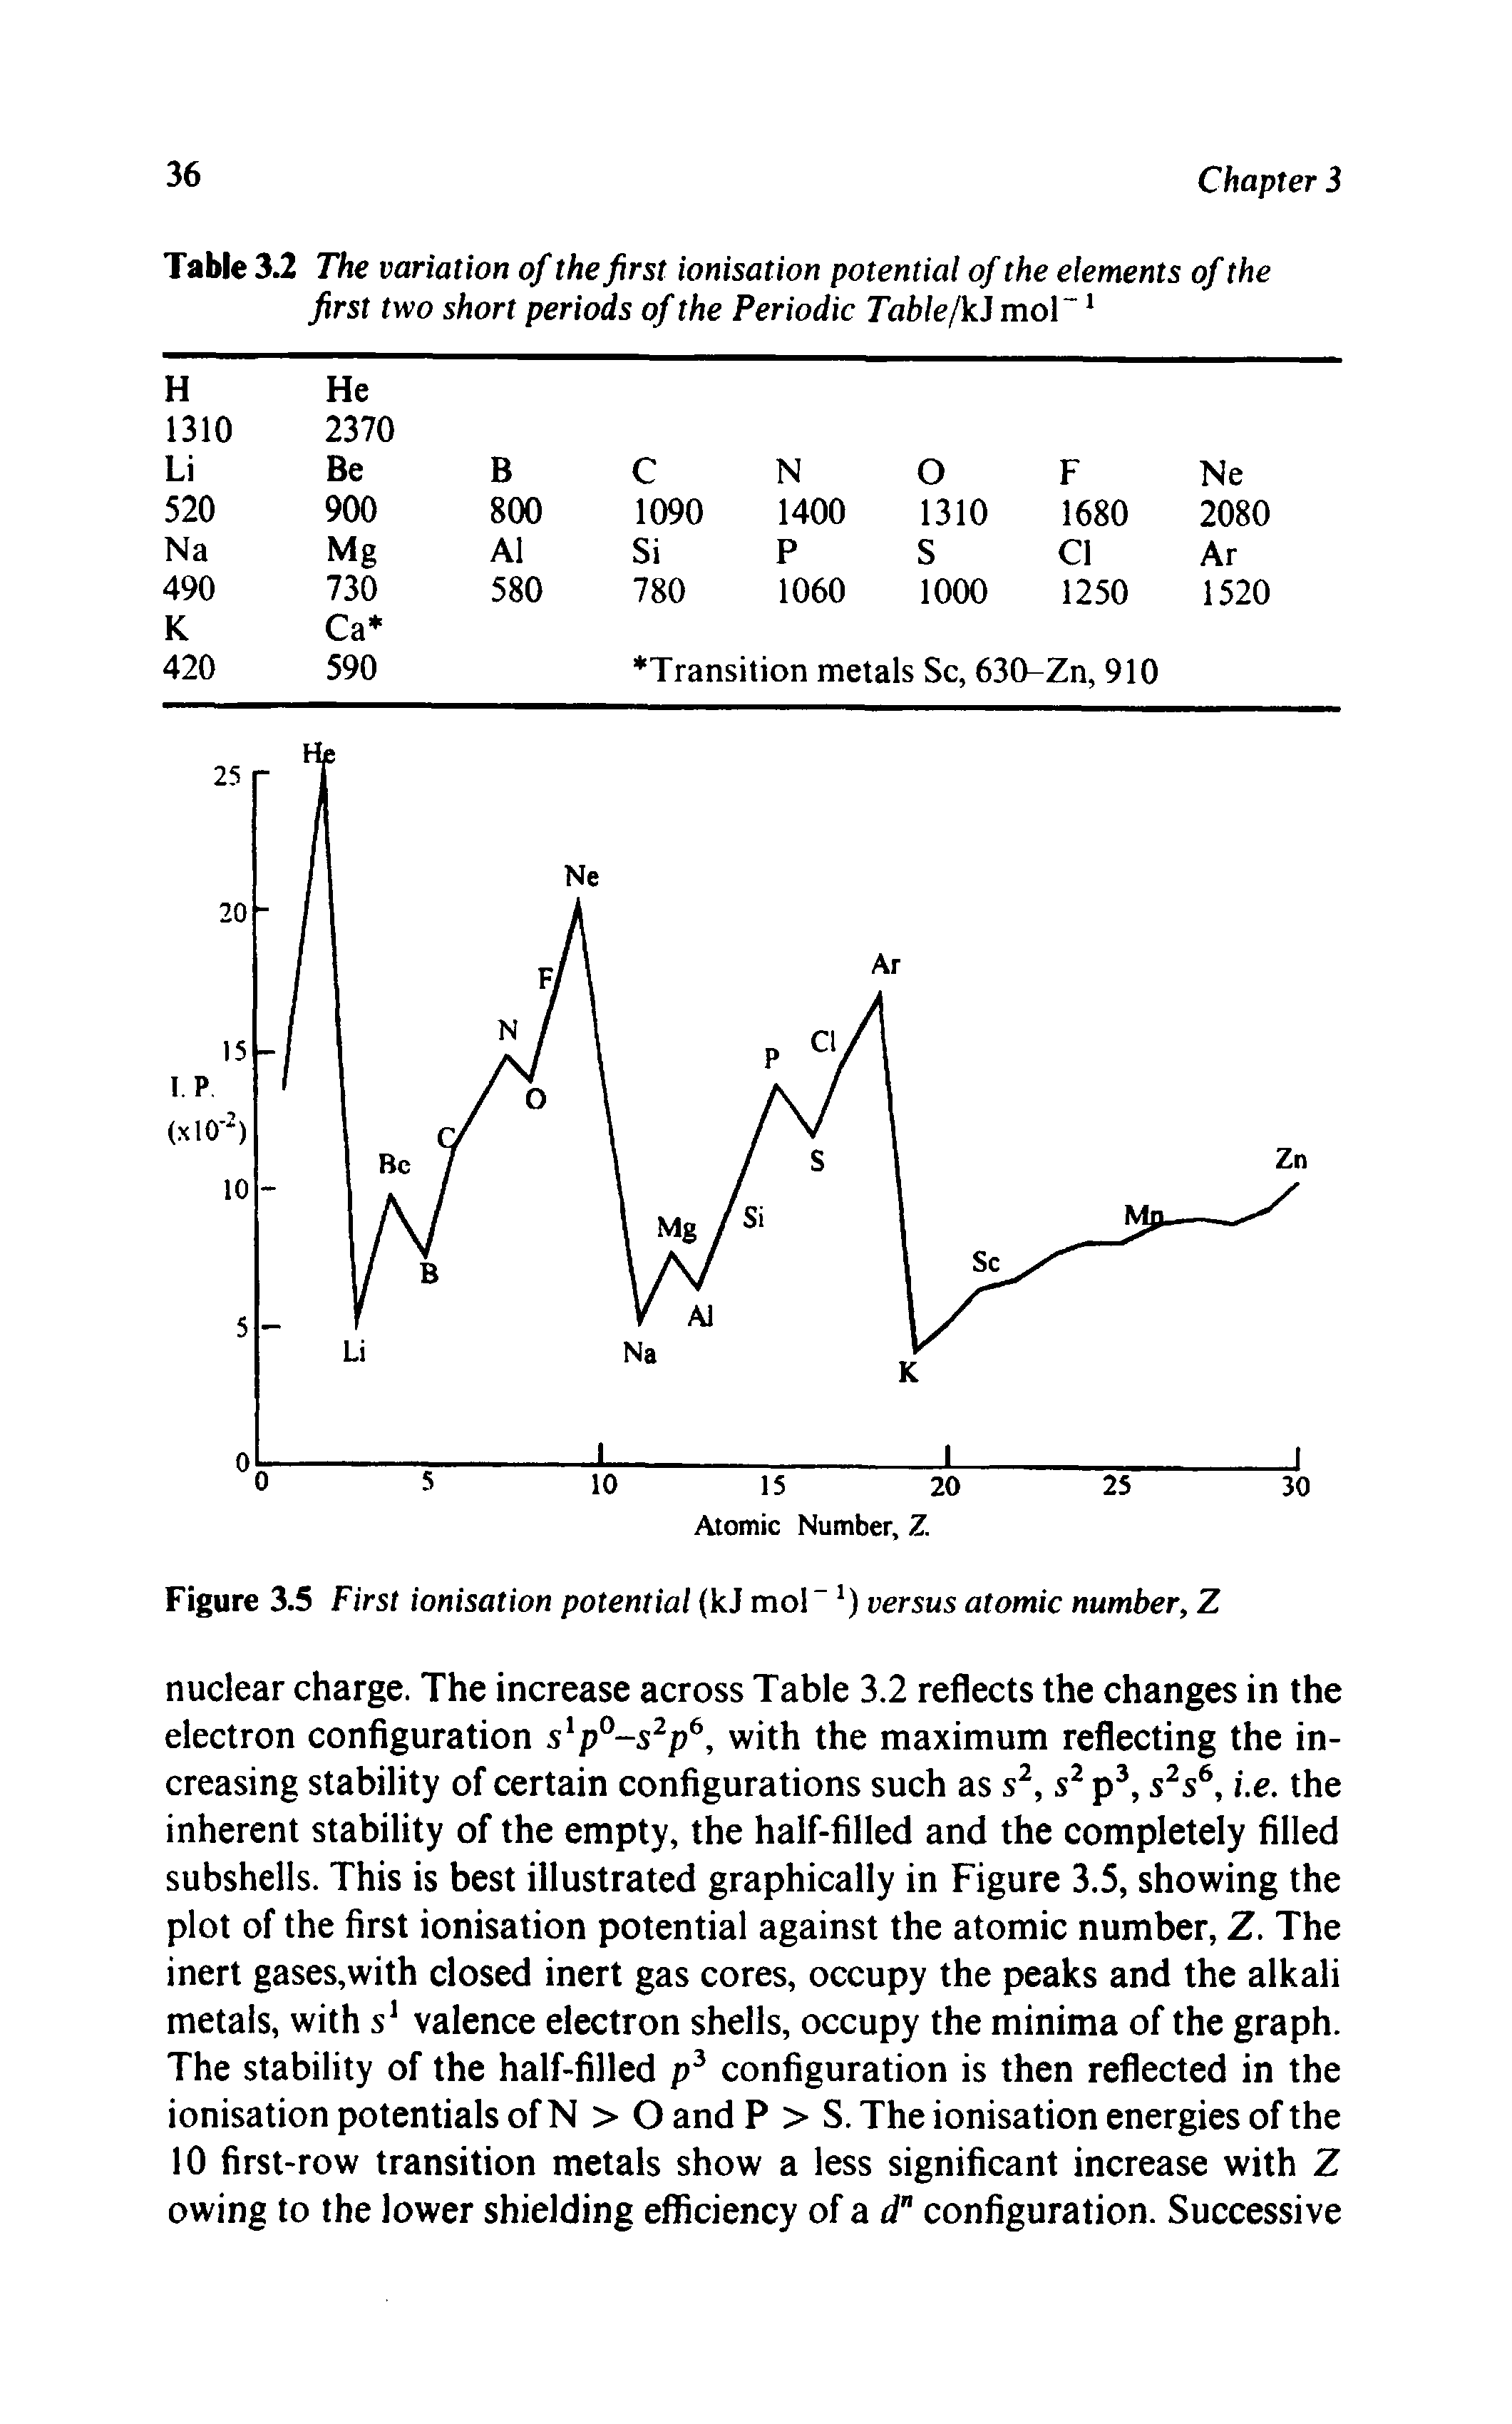 Figure 3.5 First ionisation potential (kJ moP versus atomic number, Z...